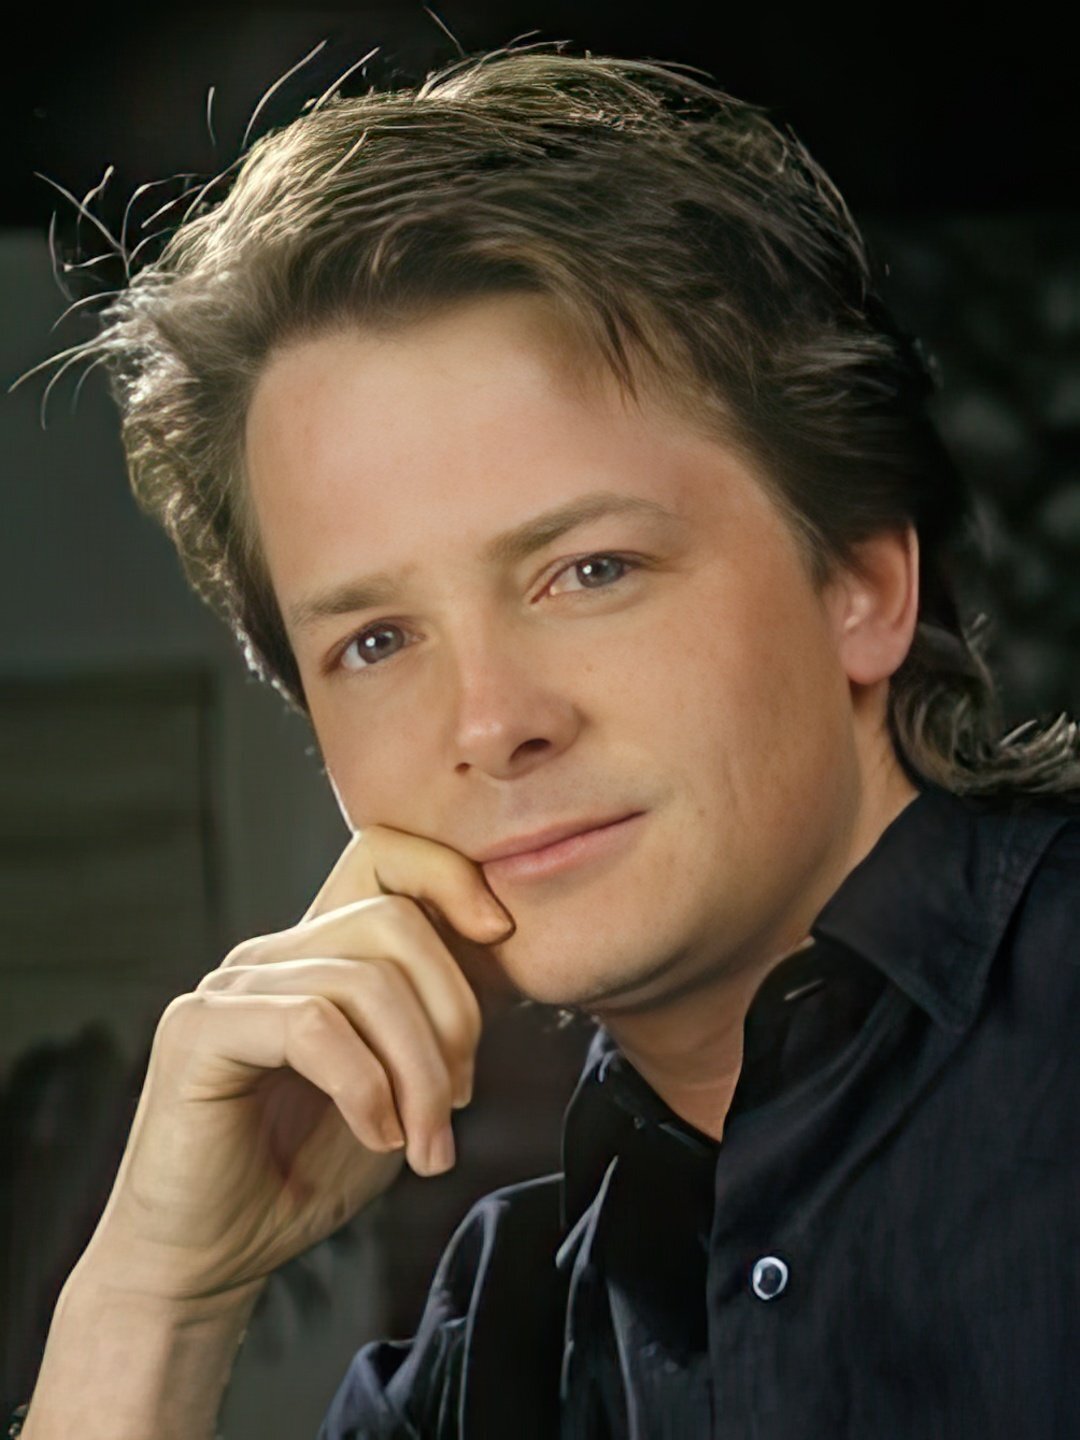 Michael J. Fox early childhood